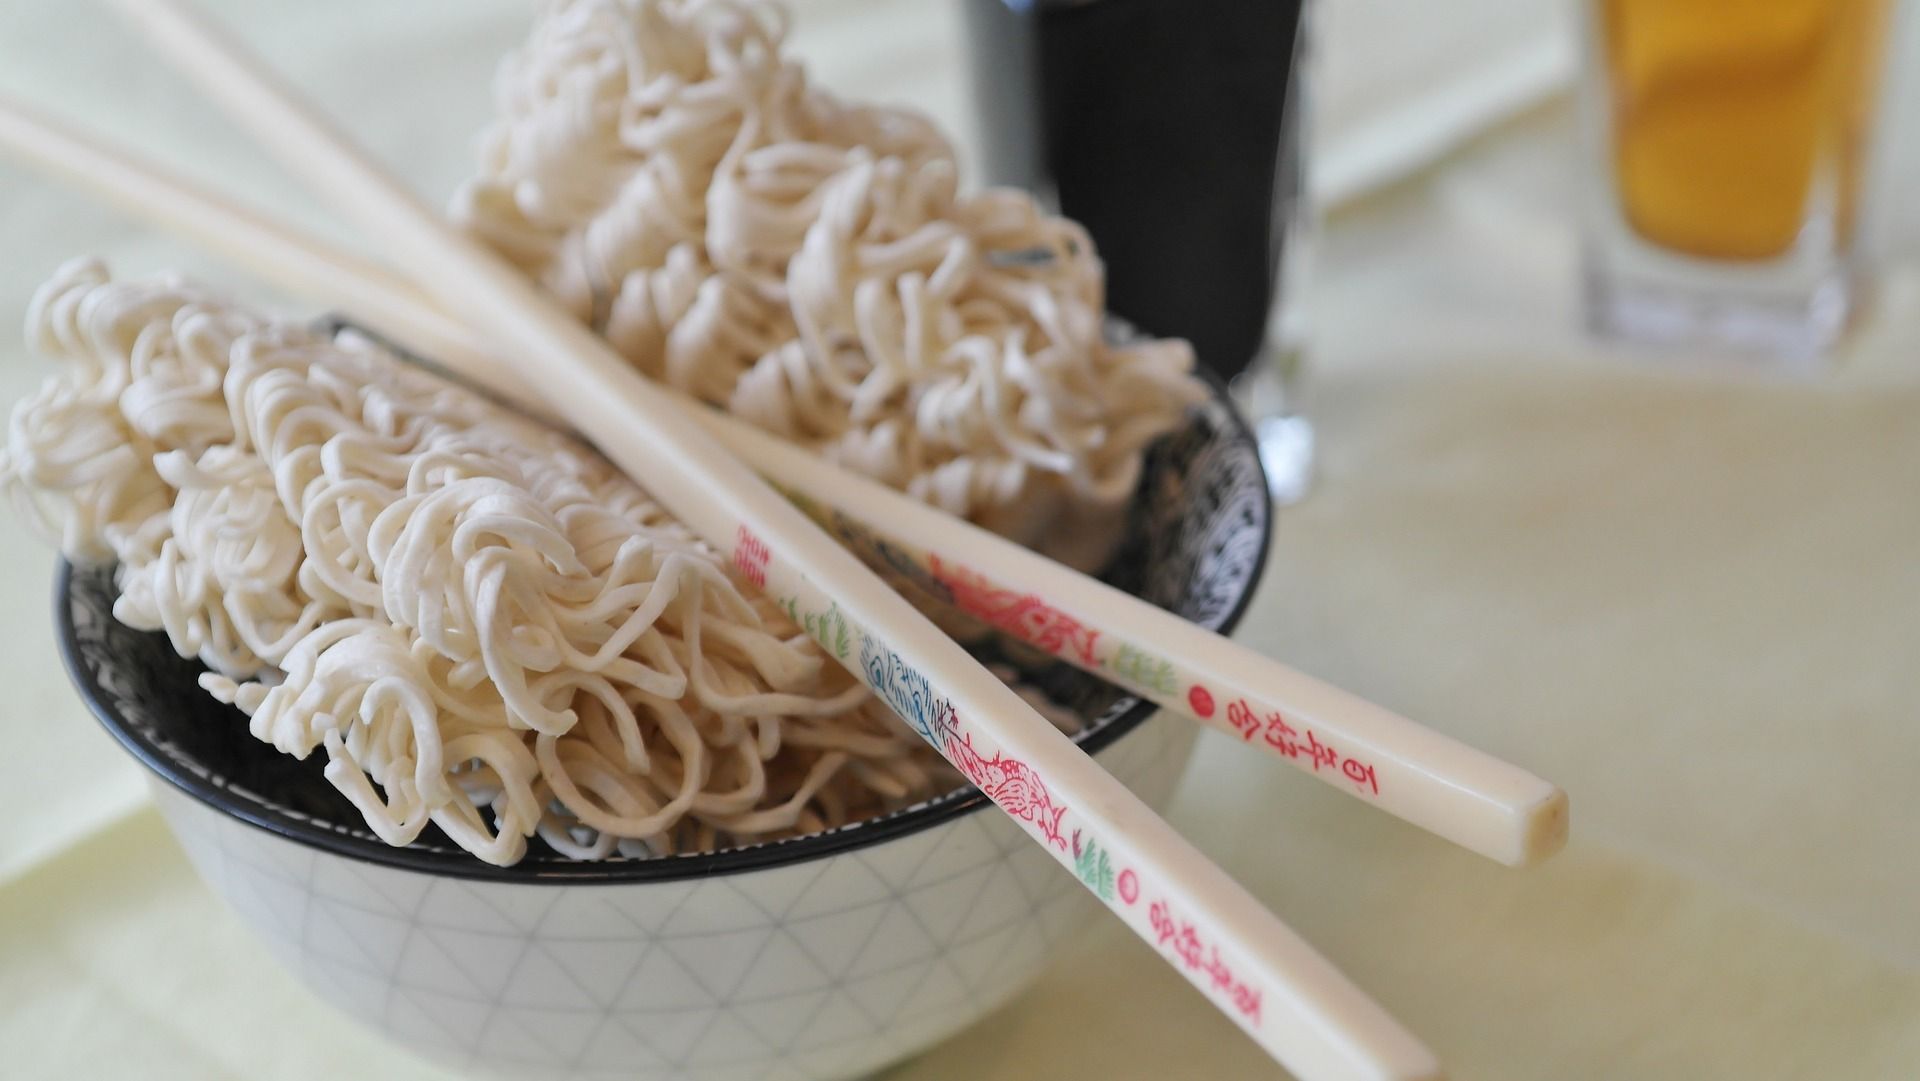 A bowl of instant ramen with chopsticks